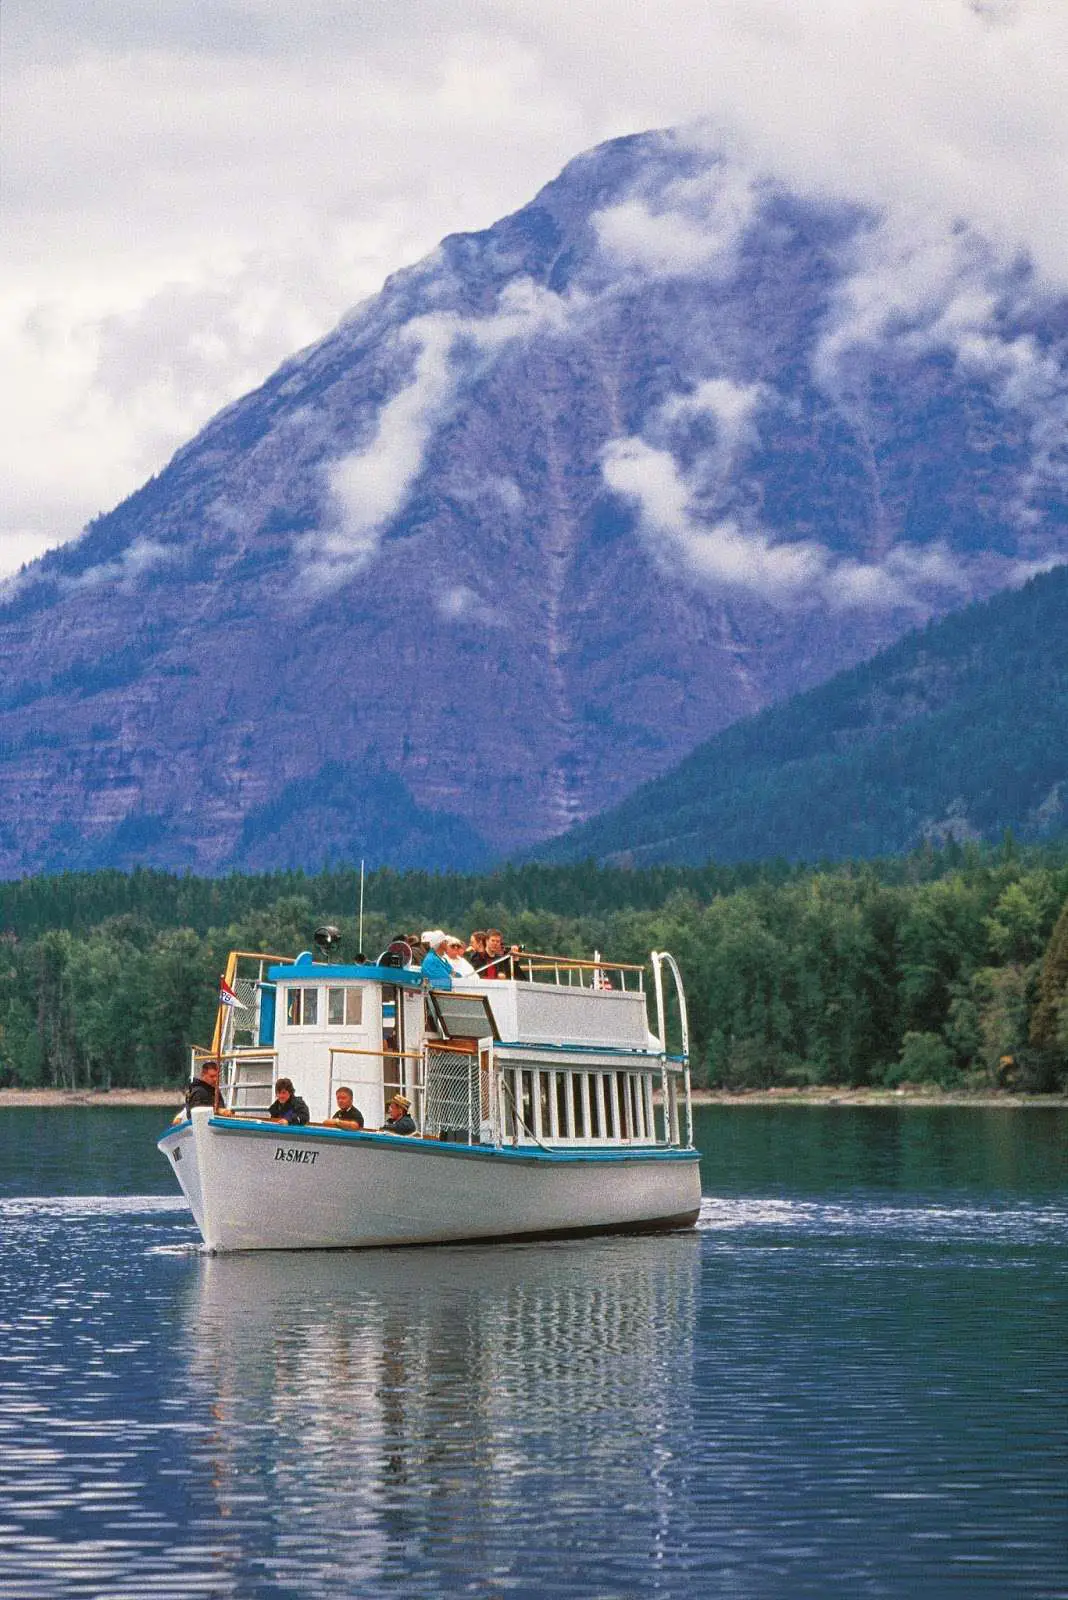 Glacier Park, Inc.: Boat Tours in Glacier National Park